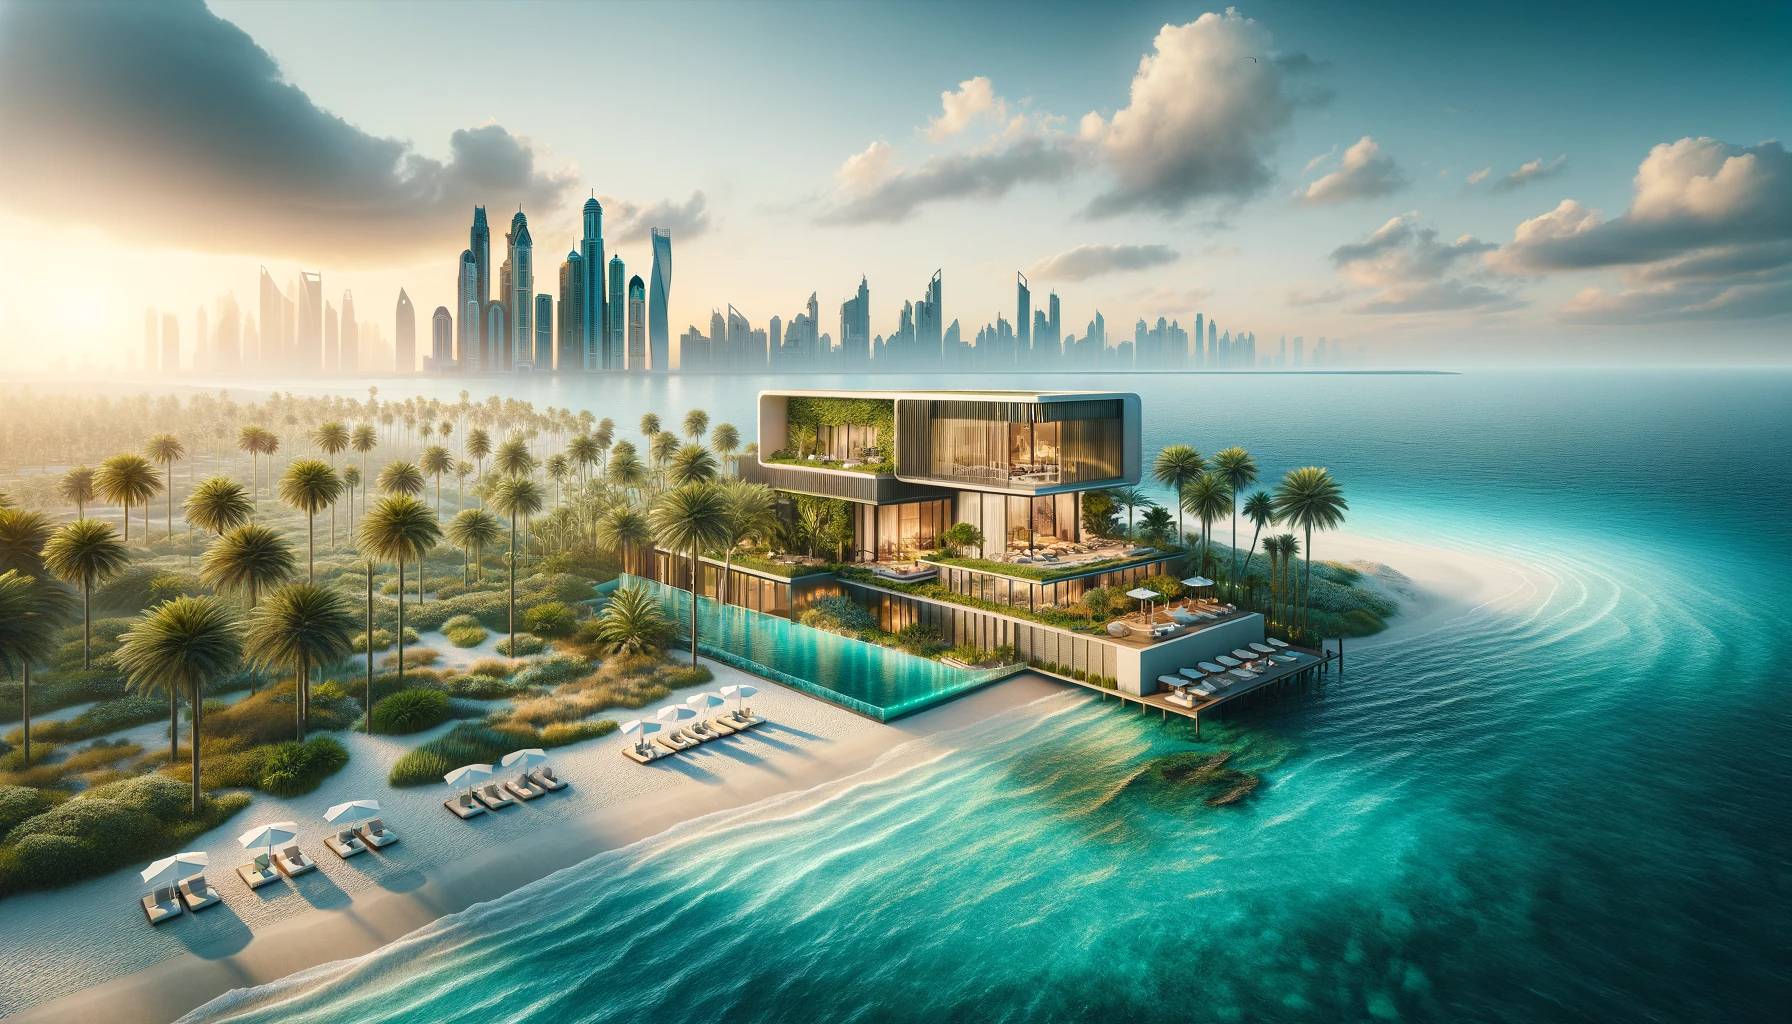 Aman Dubai: The Most Luxurious Resort in the History of Dubai?